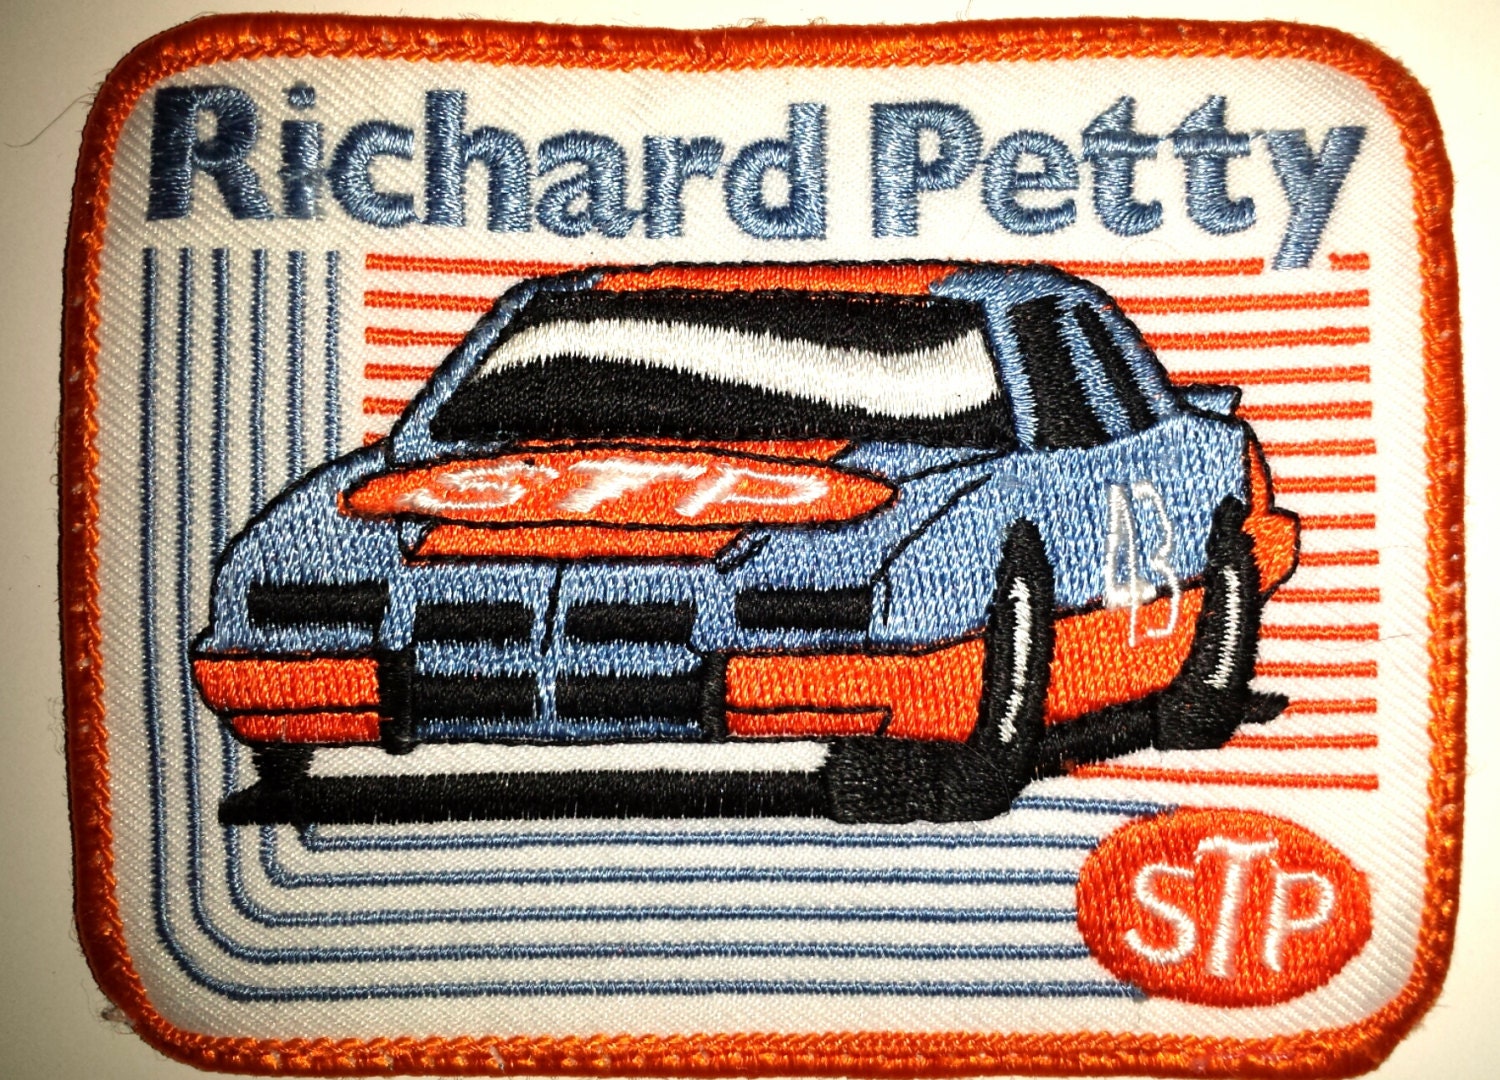 RICHARD PETTY STP 43 Patch embroidered iron-on by Gidgetandme